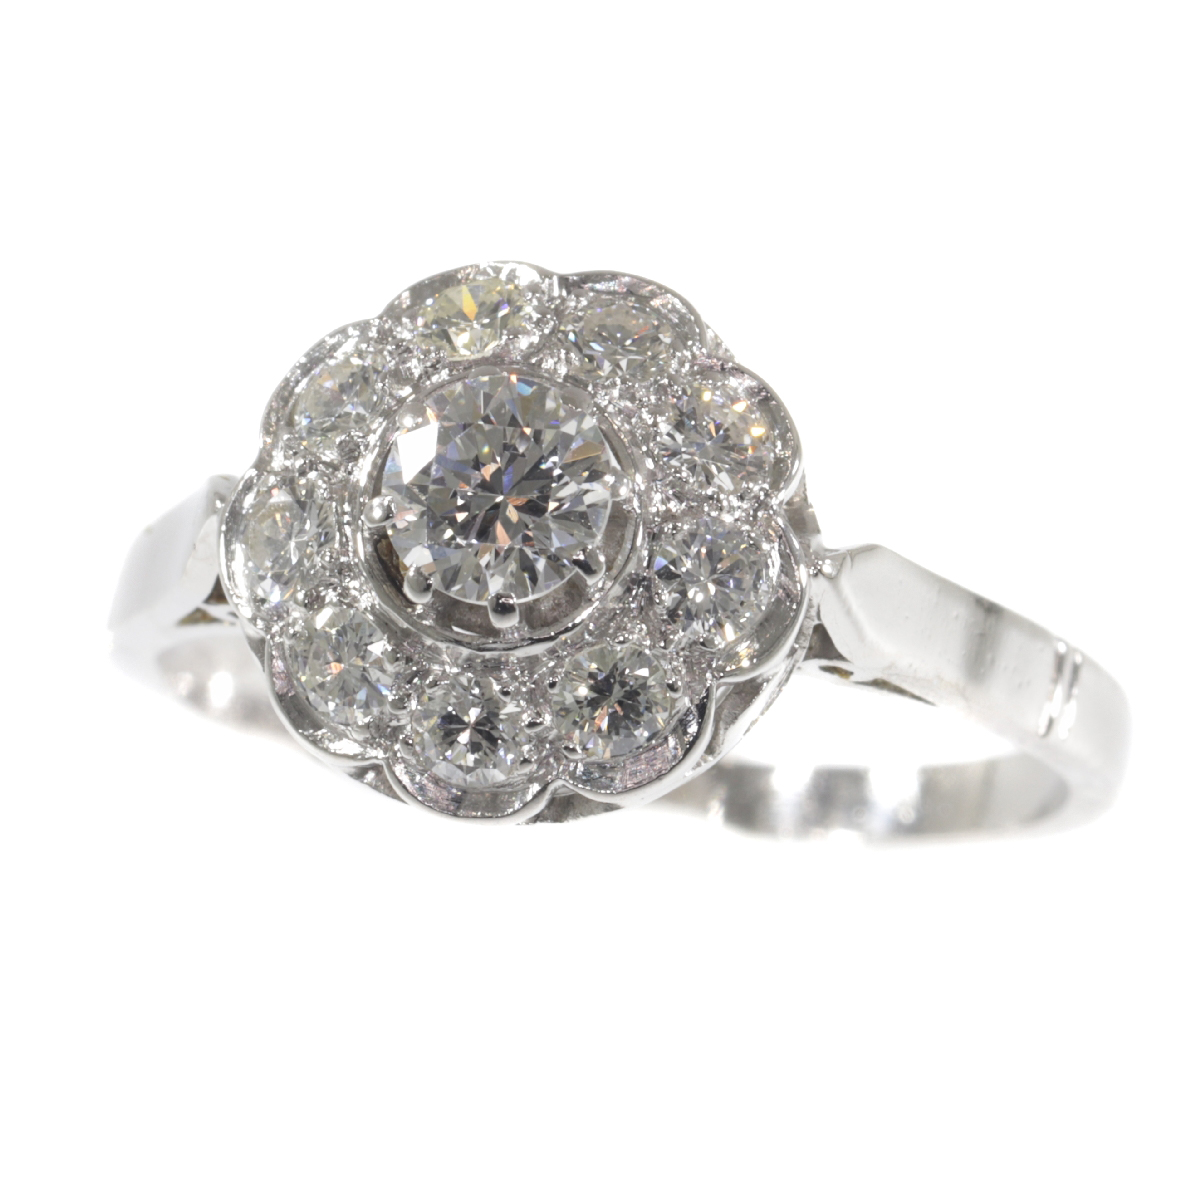 Vintage engagement ring 1950's platinum and brilliant cut diamonds